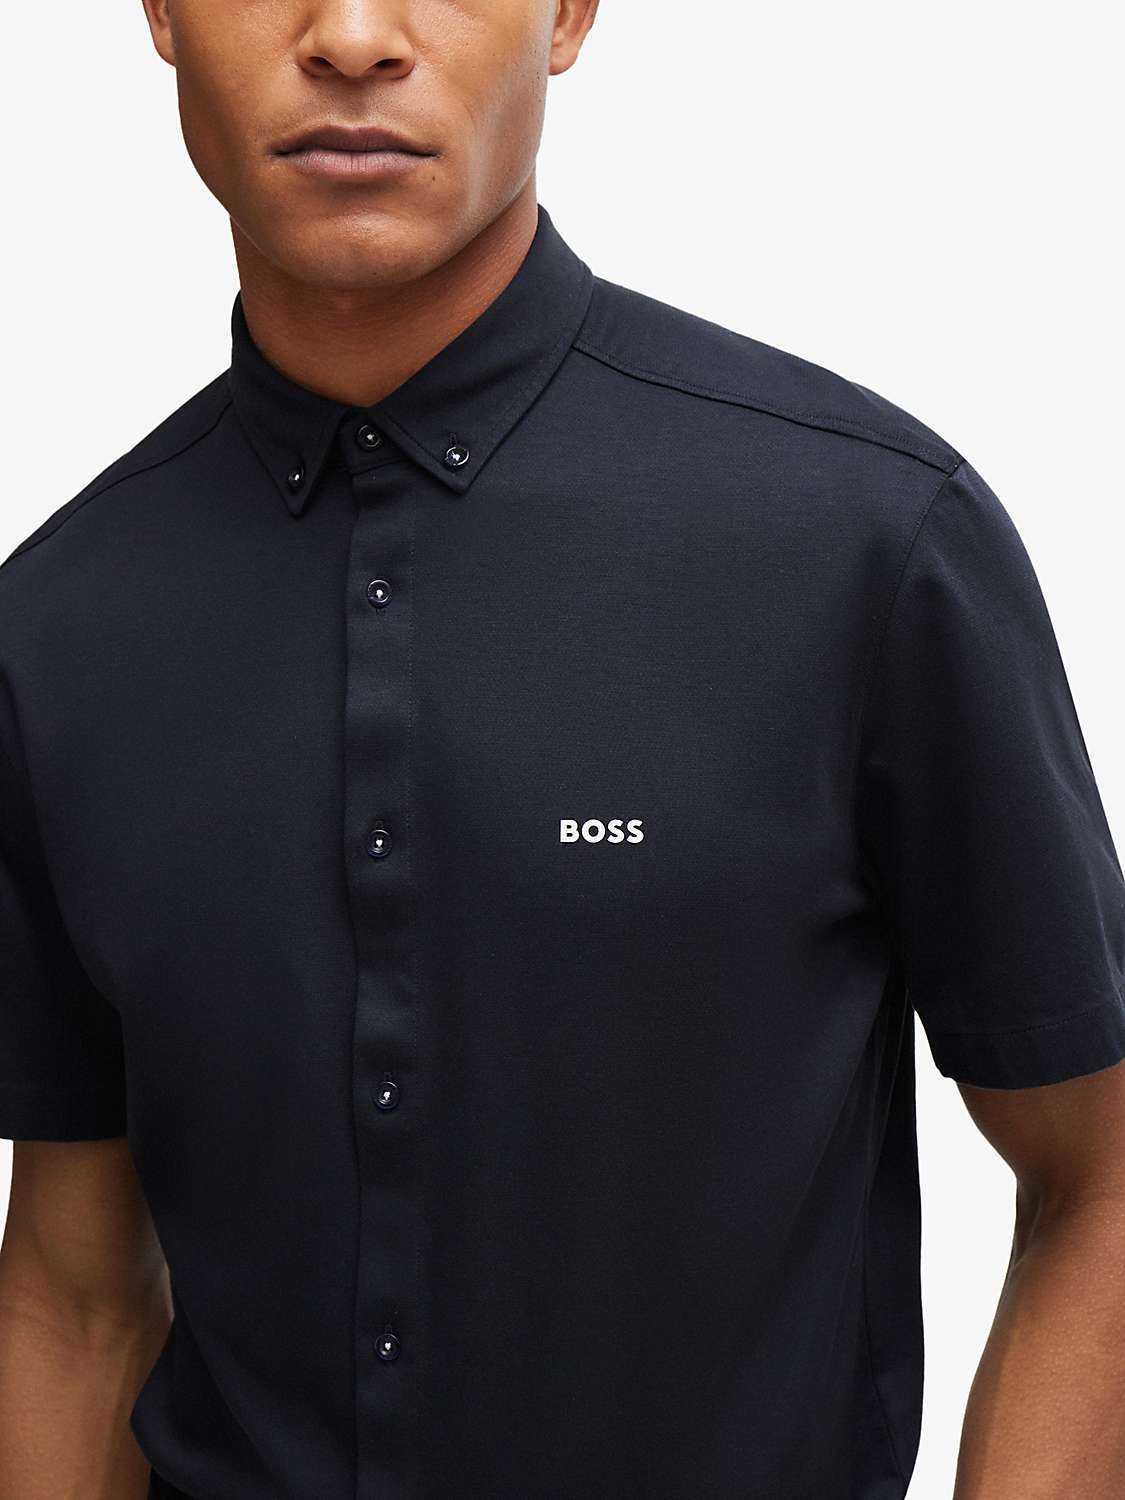 Buy BOSS Cotton Motion Jersey Shirt Online at johnlewis.com